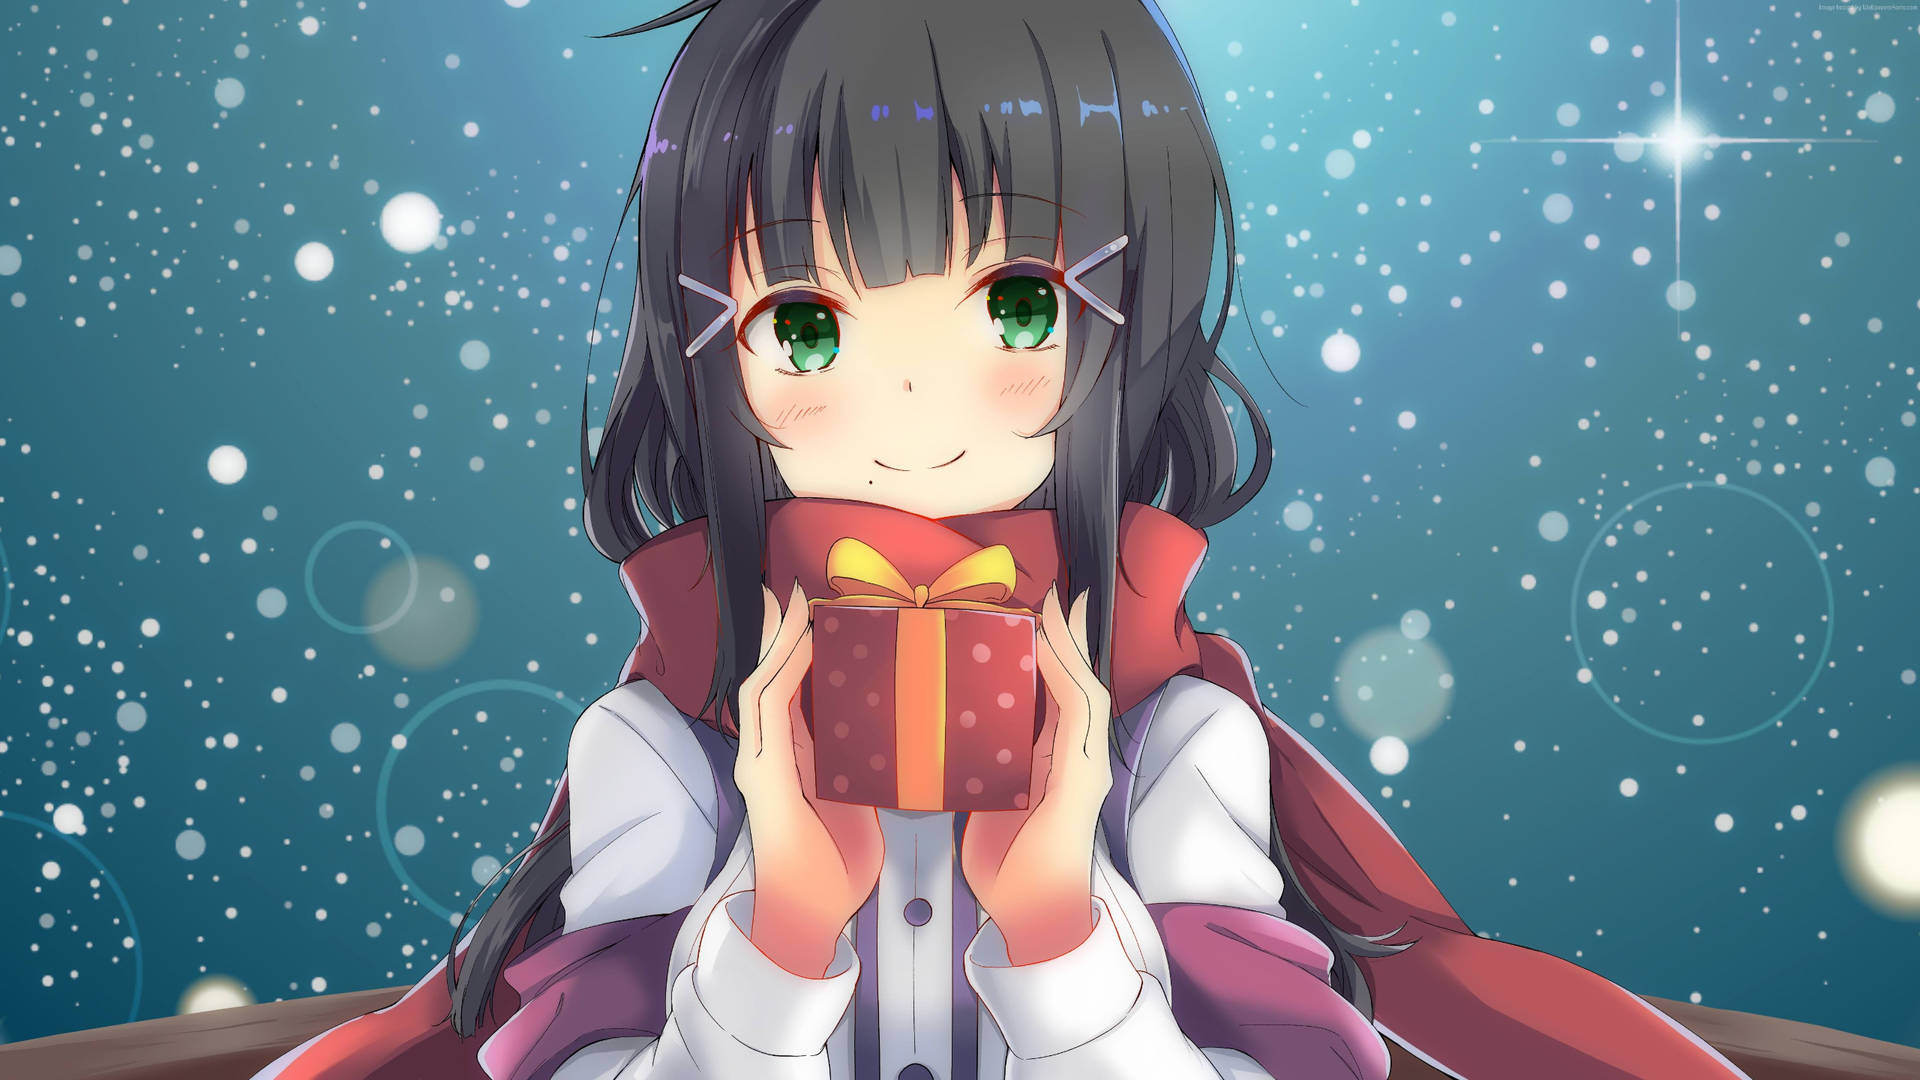 Anime Christmas Girl With Gift Box Background